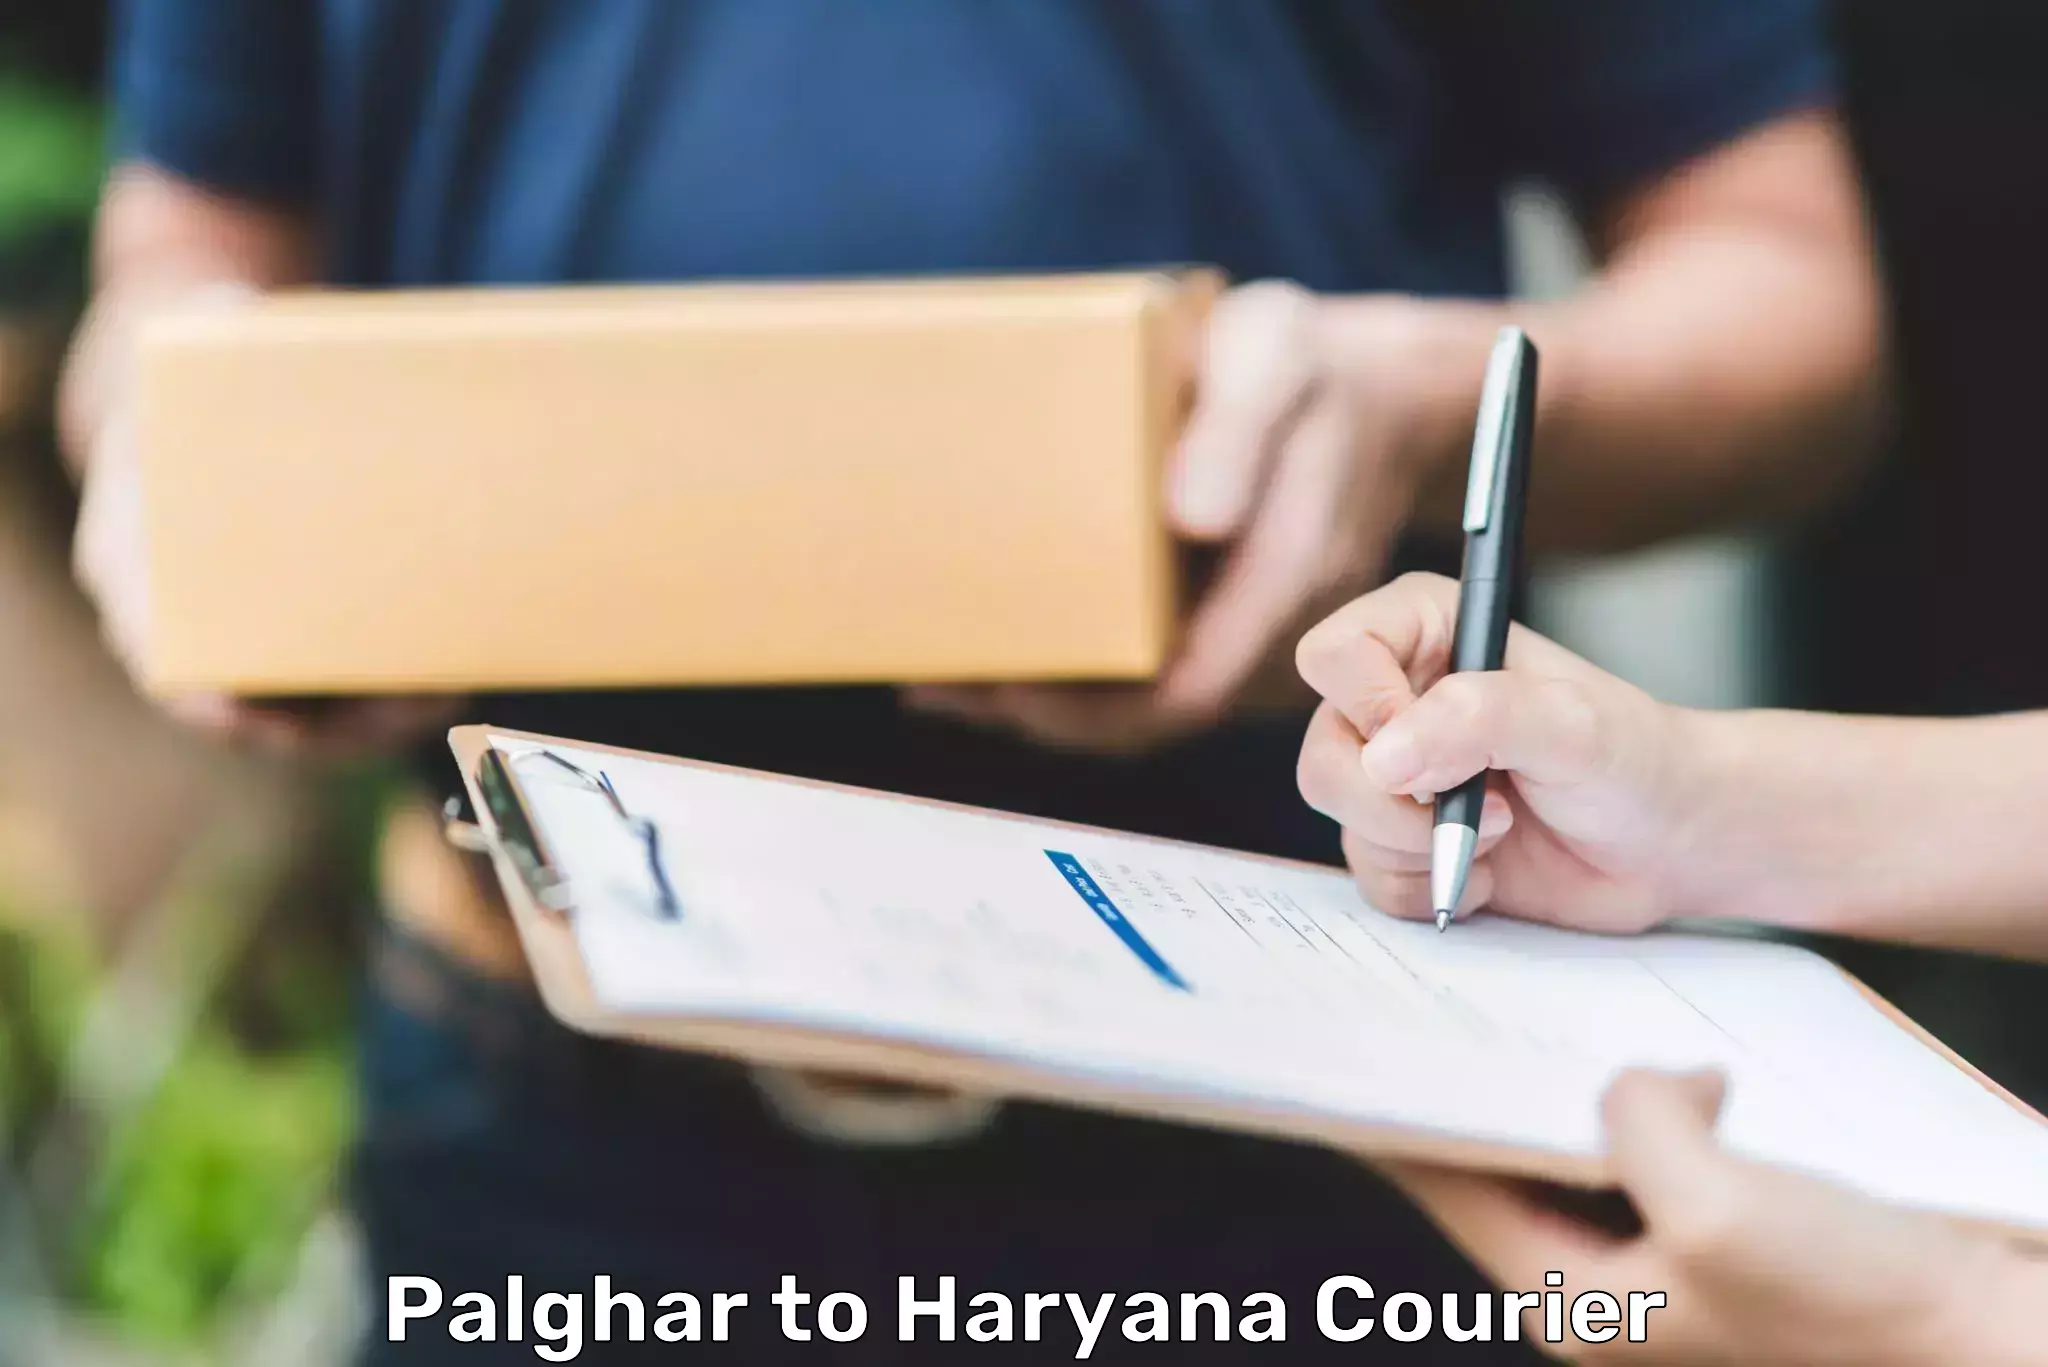 Courier service comparison Palghar to Faridabad